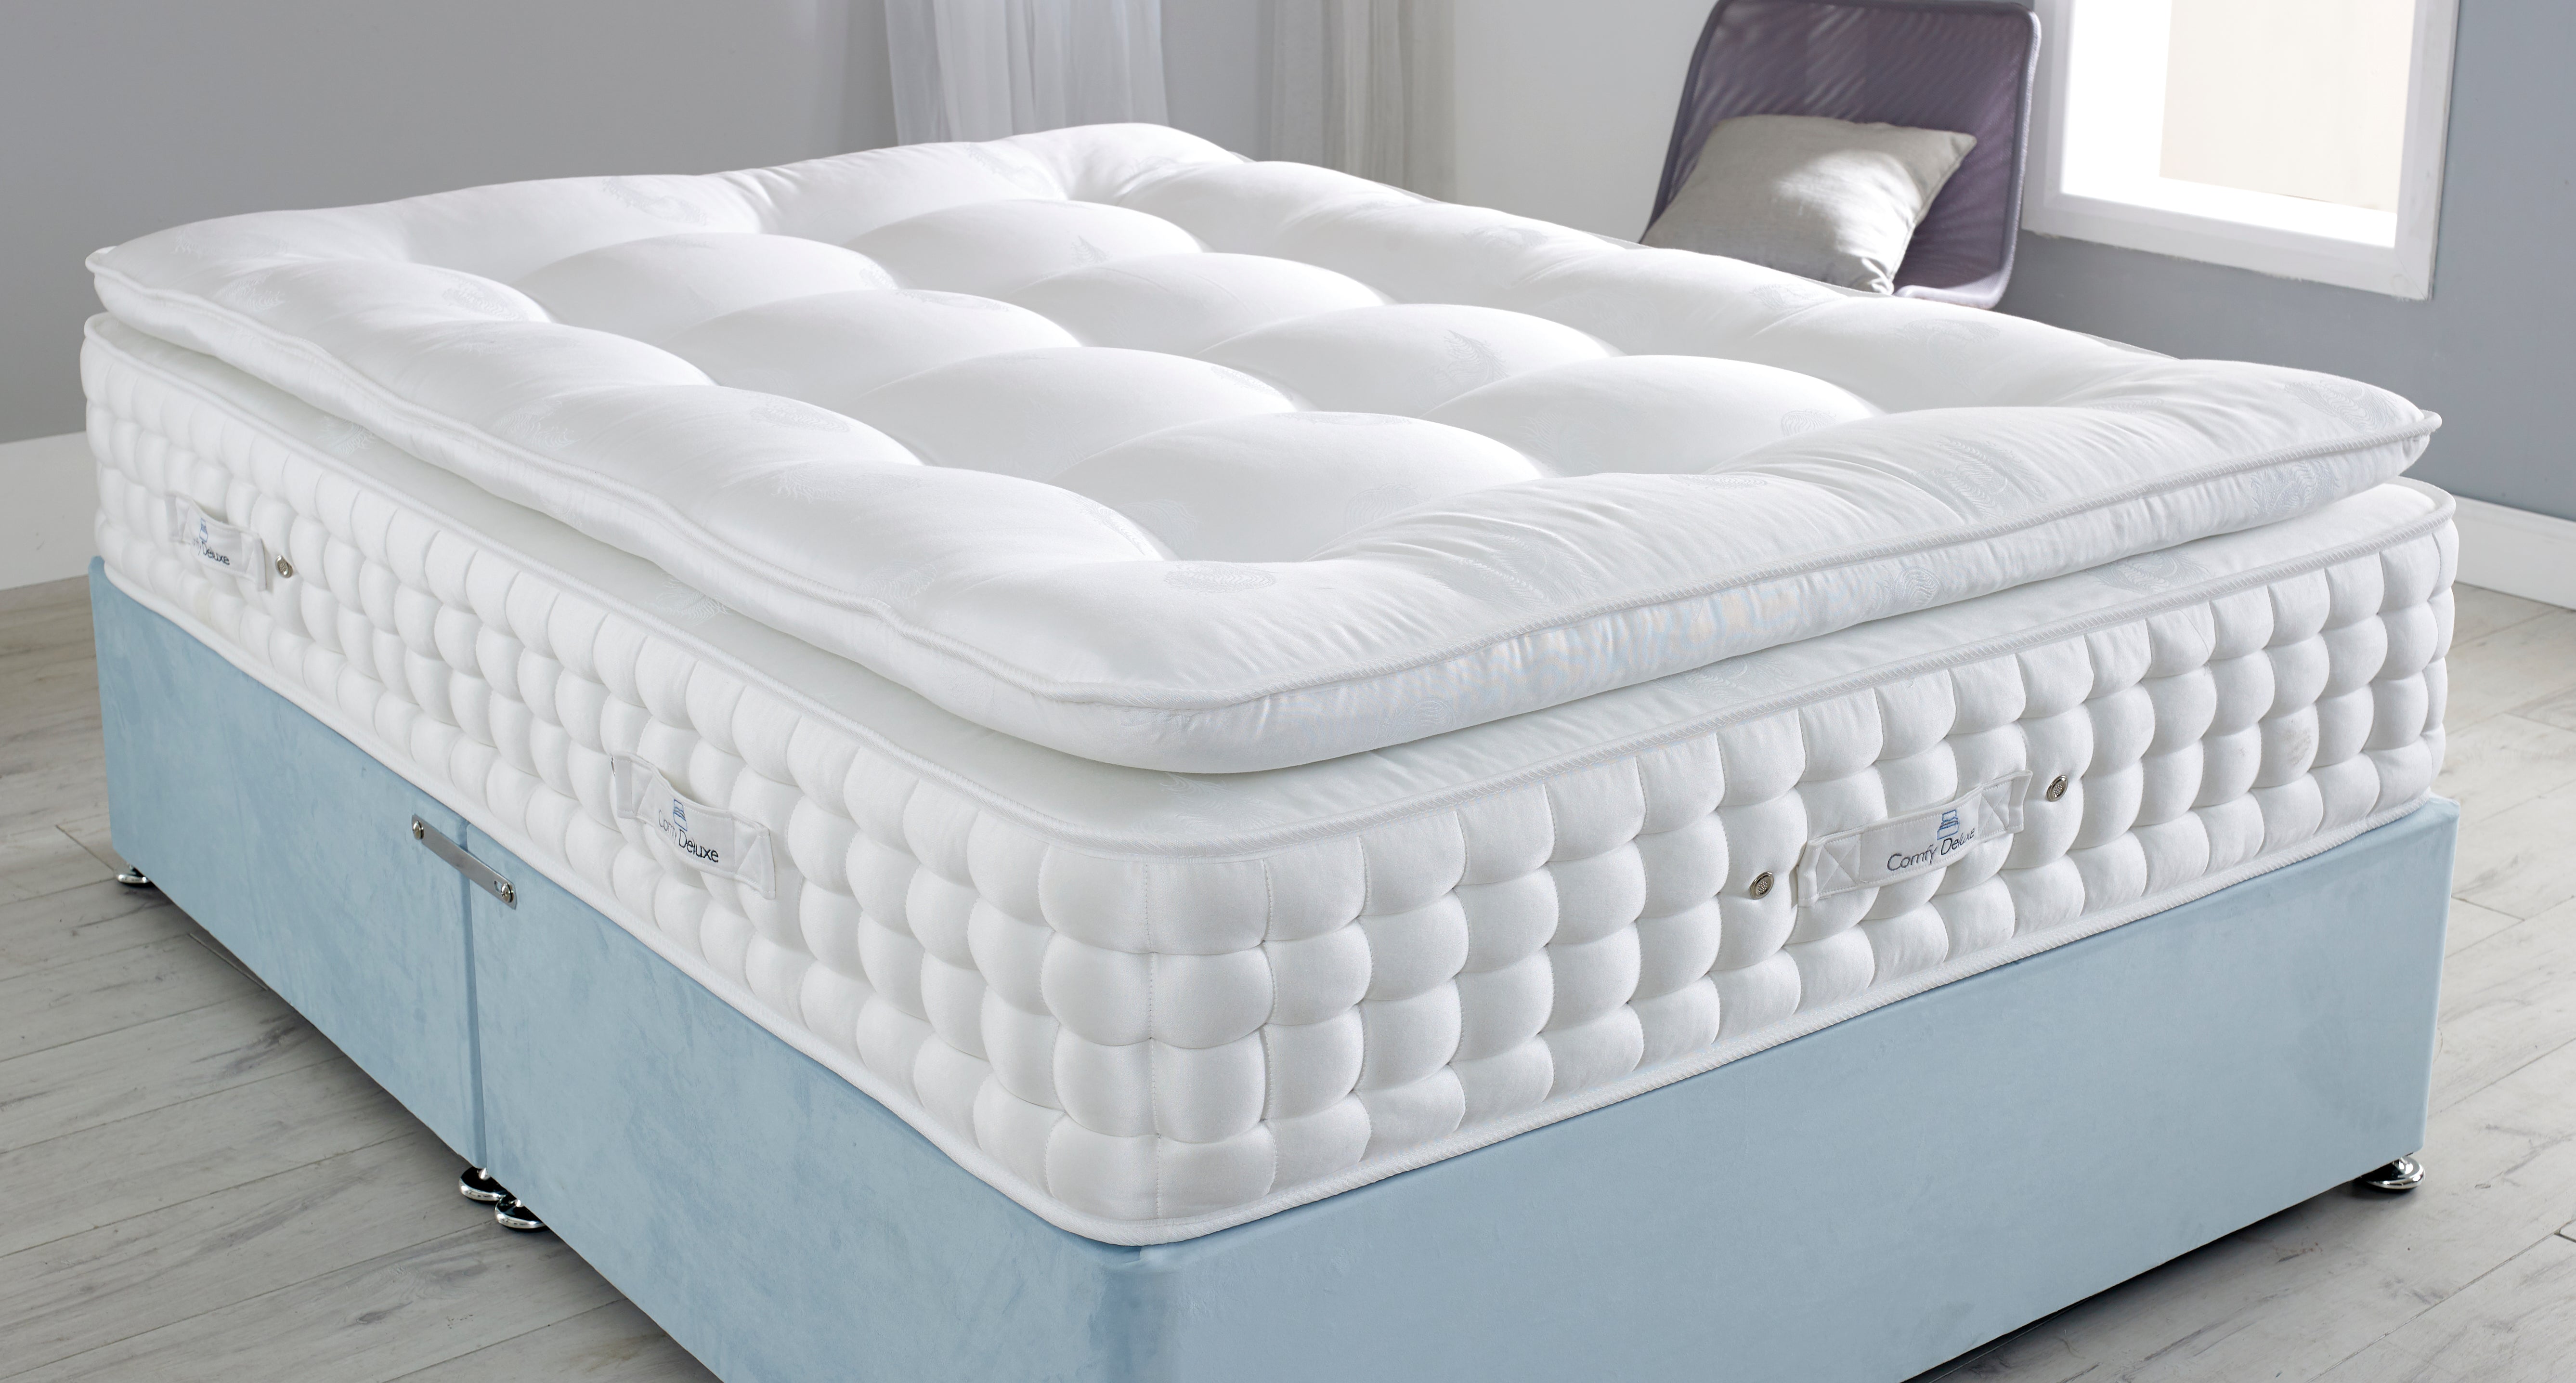 clasic brandking size double pillow top mattress online